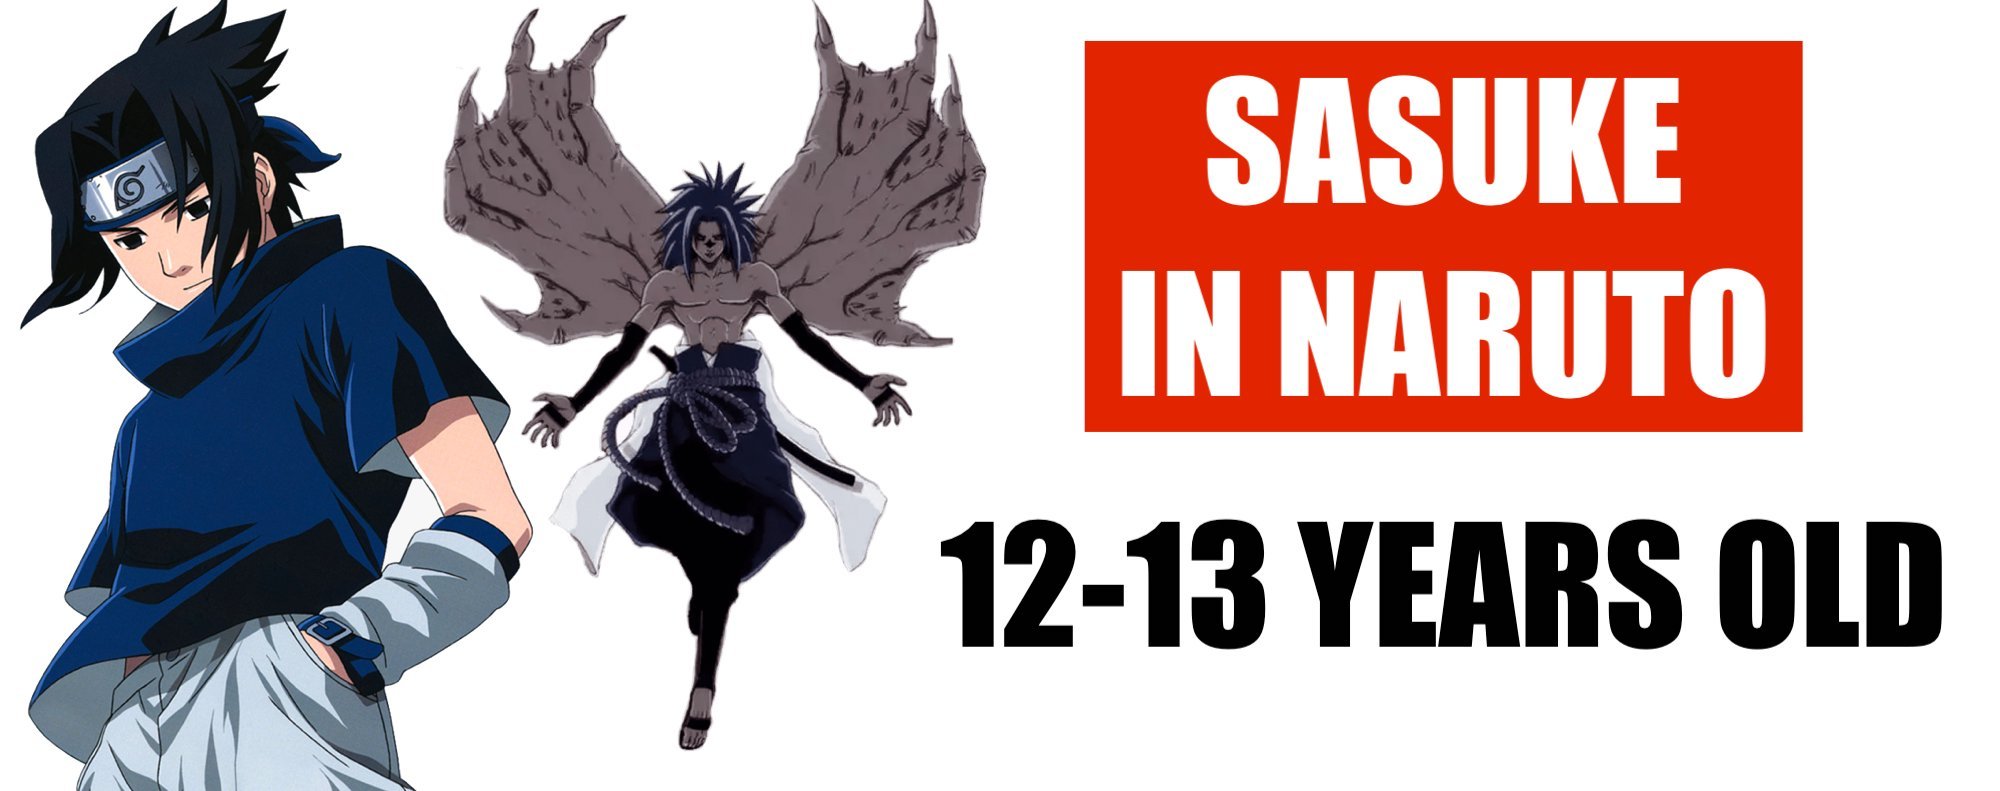 how old is sasuke in naruto